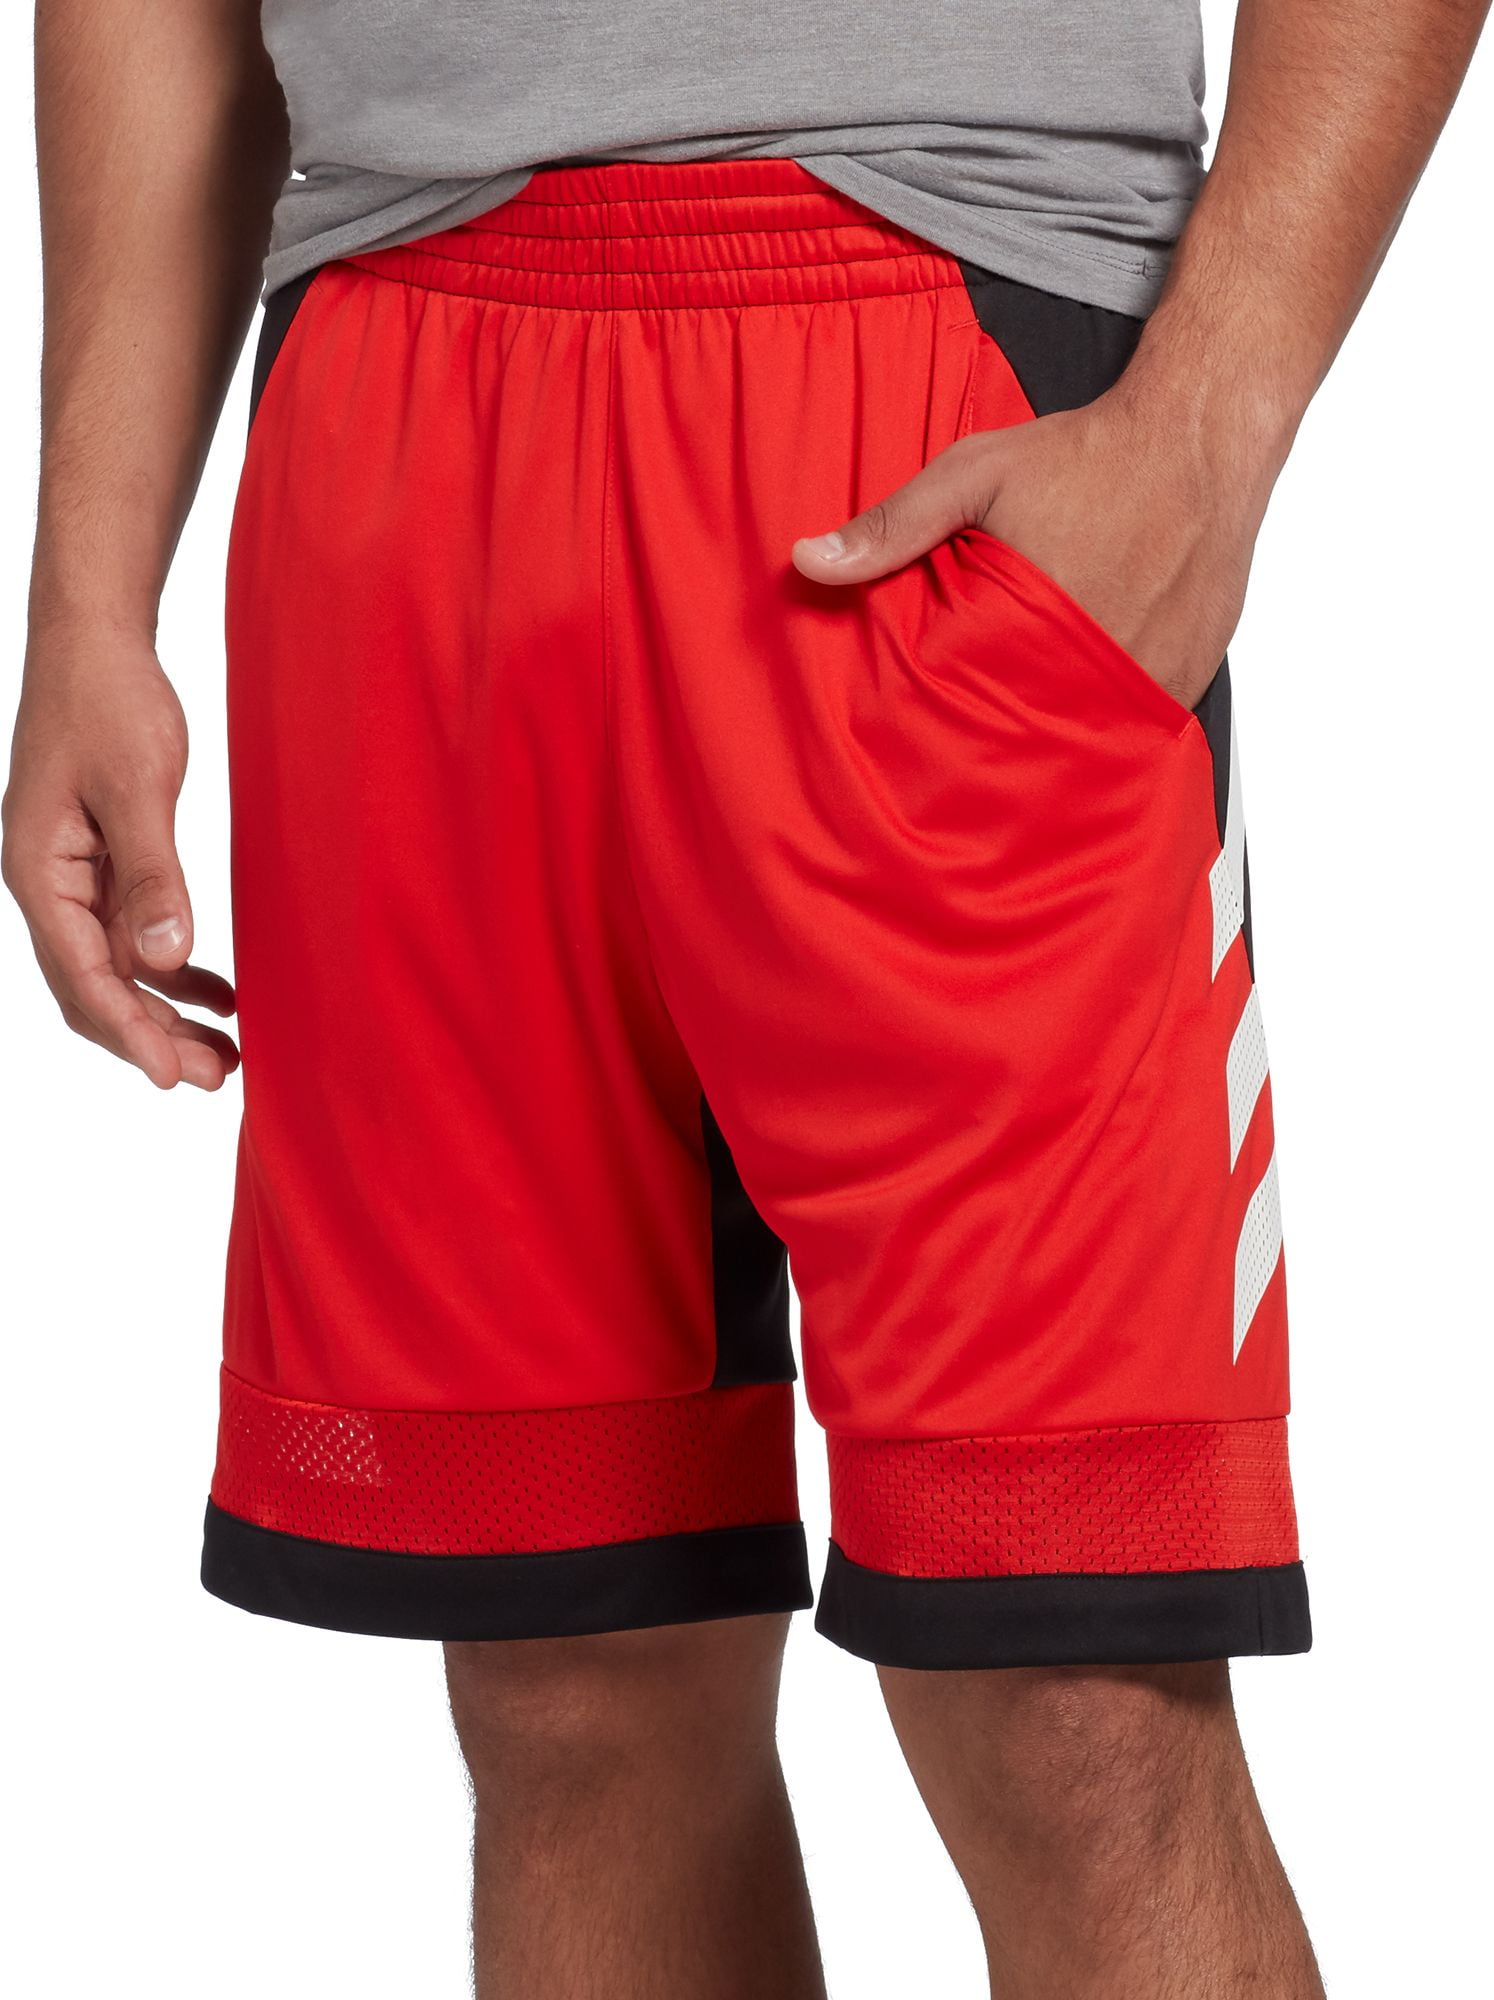 Adidas - adidas Men's Pro Bounce Basketball Shorts - Walmart.com ...